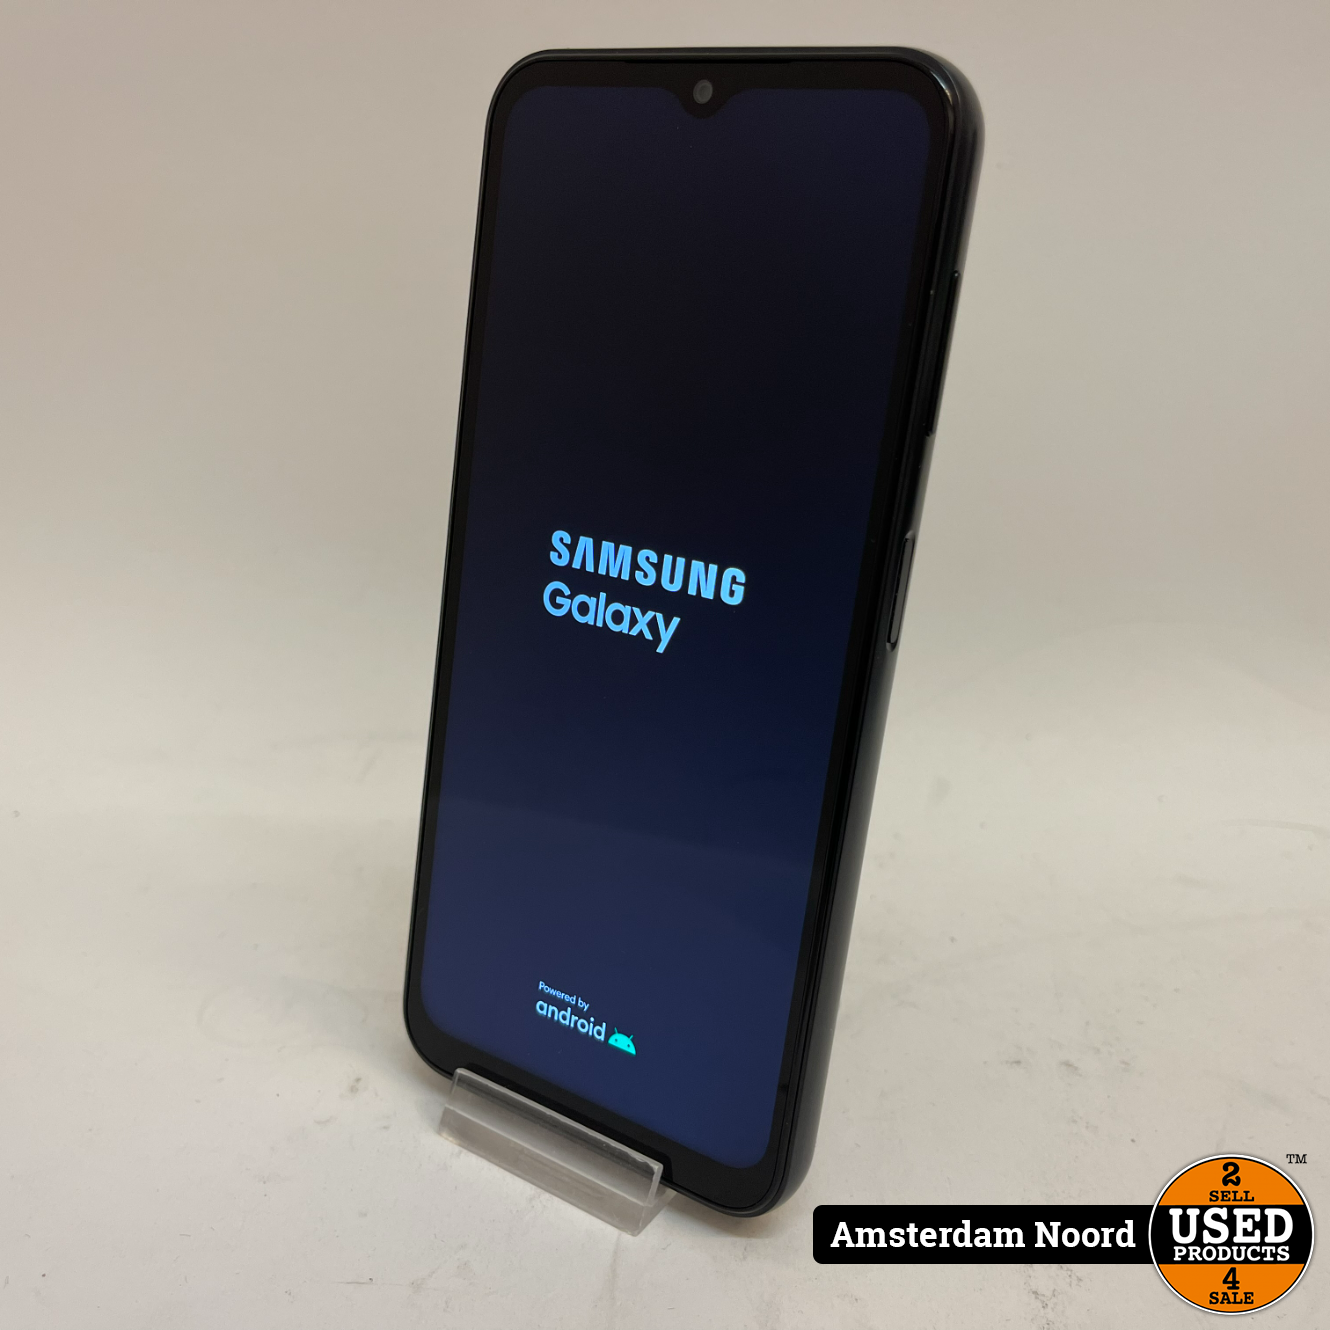 Wreed chirurg alias Samsung Galaxy A14 64GB Zwart (Nieuwstaat) - Used Products Amsterdam Noord